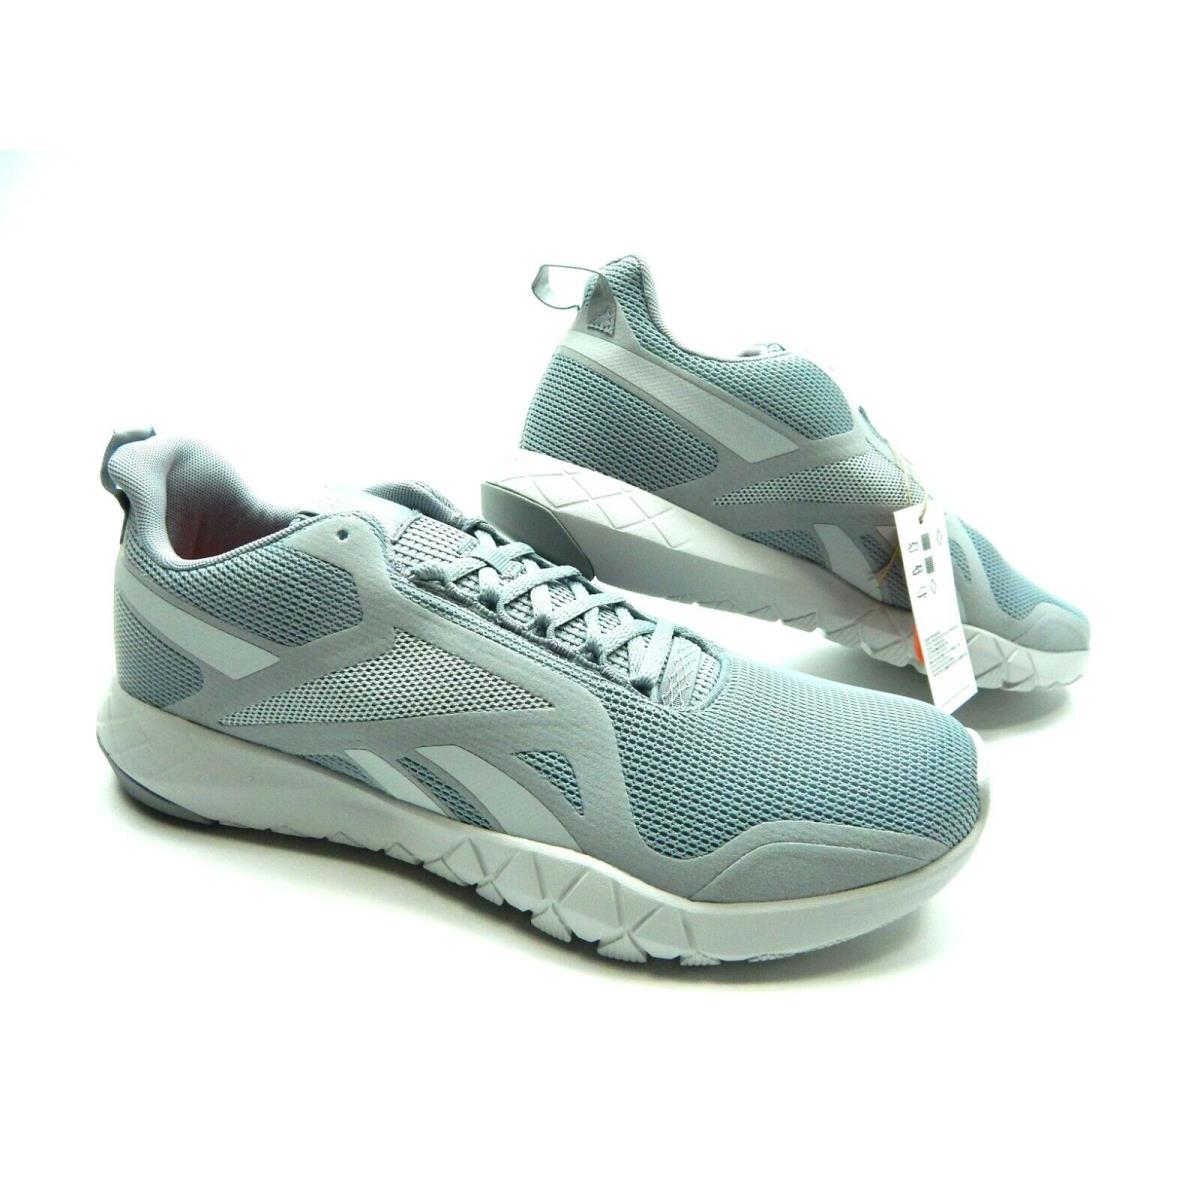 Reebok Flexagon Force 3.0 FY1250 Pugry 4 Training Men Shoes Size 10